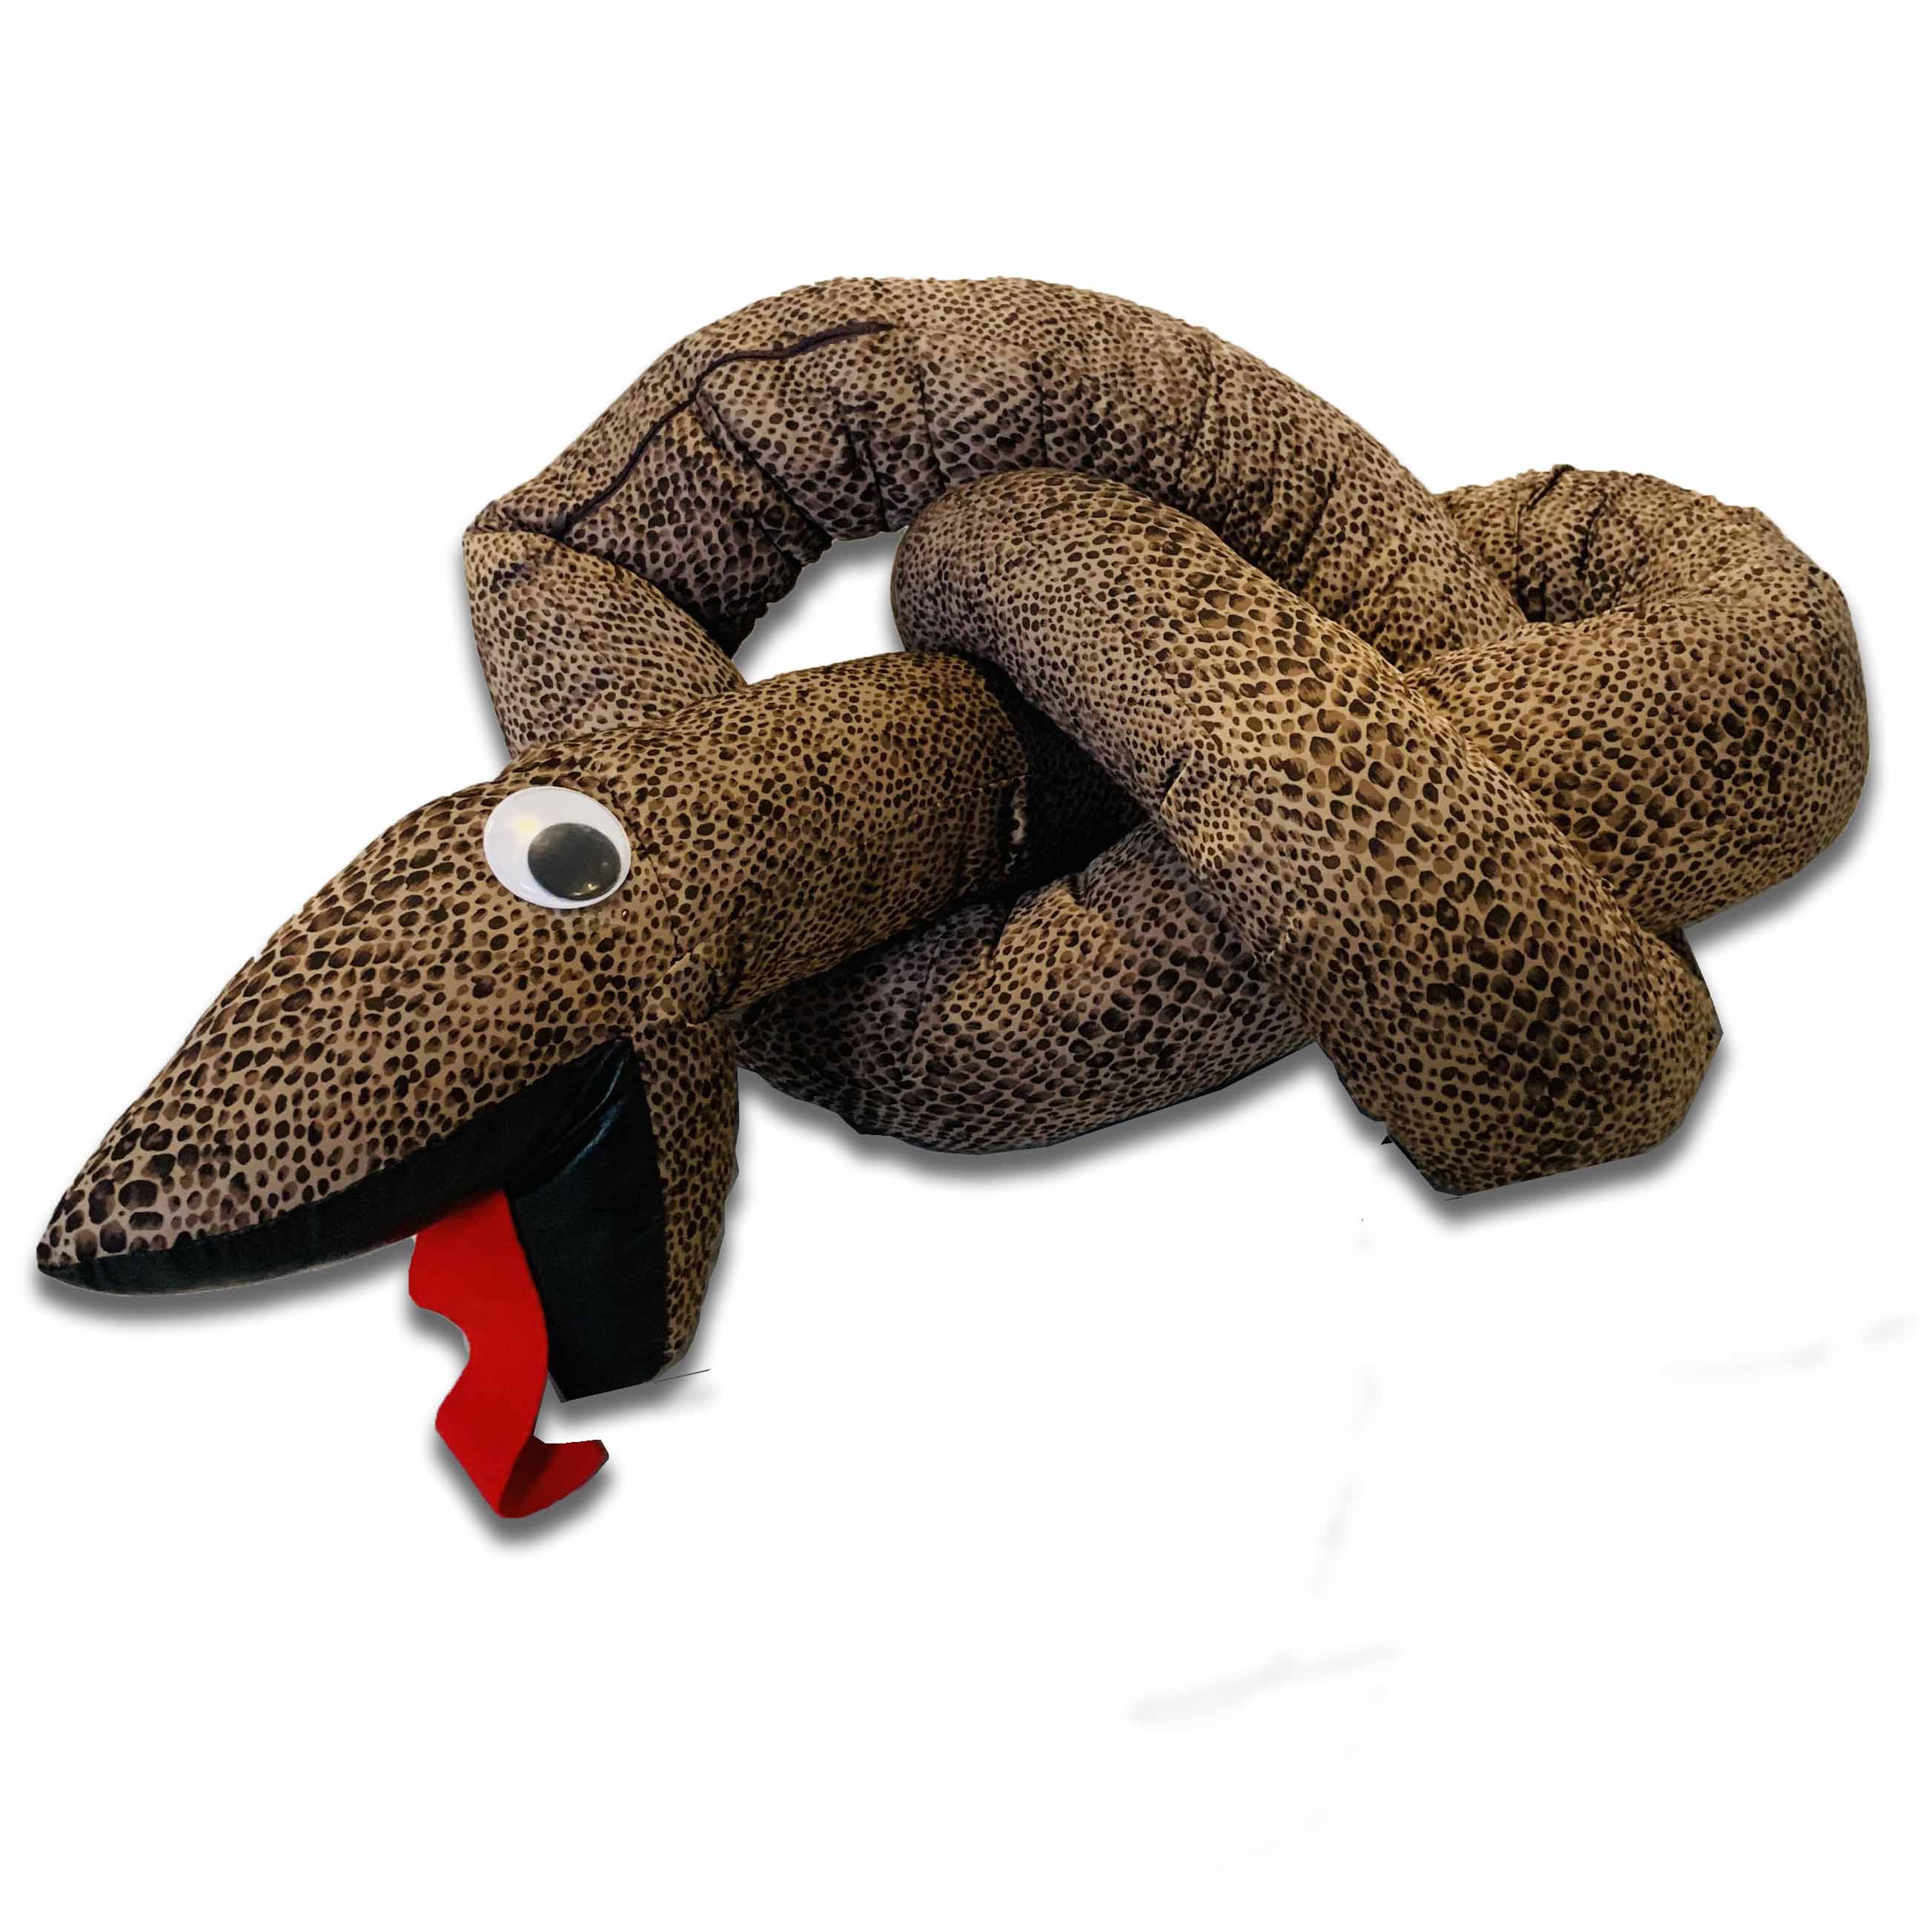 Stuffed Animal Snake Toy Kids -  - Relaxsit